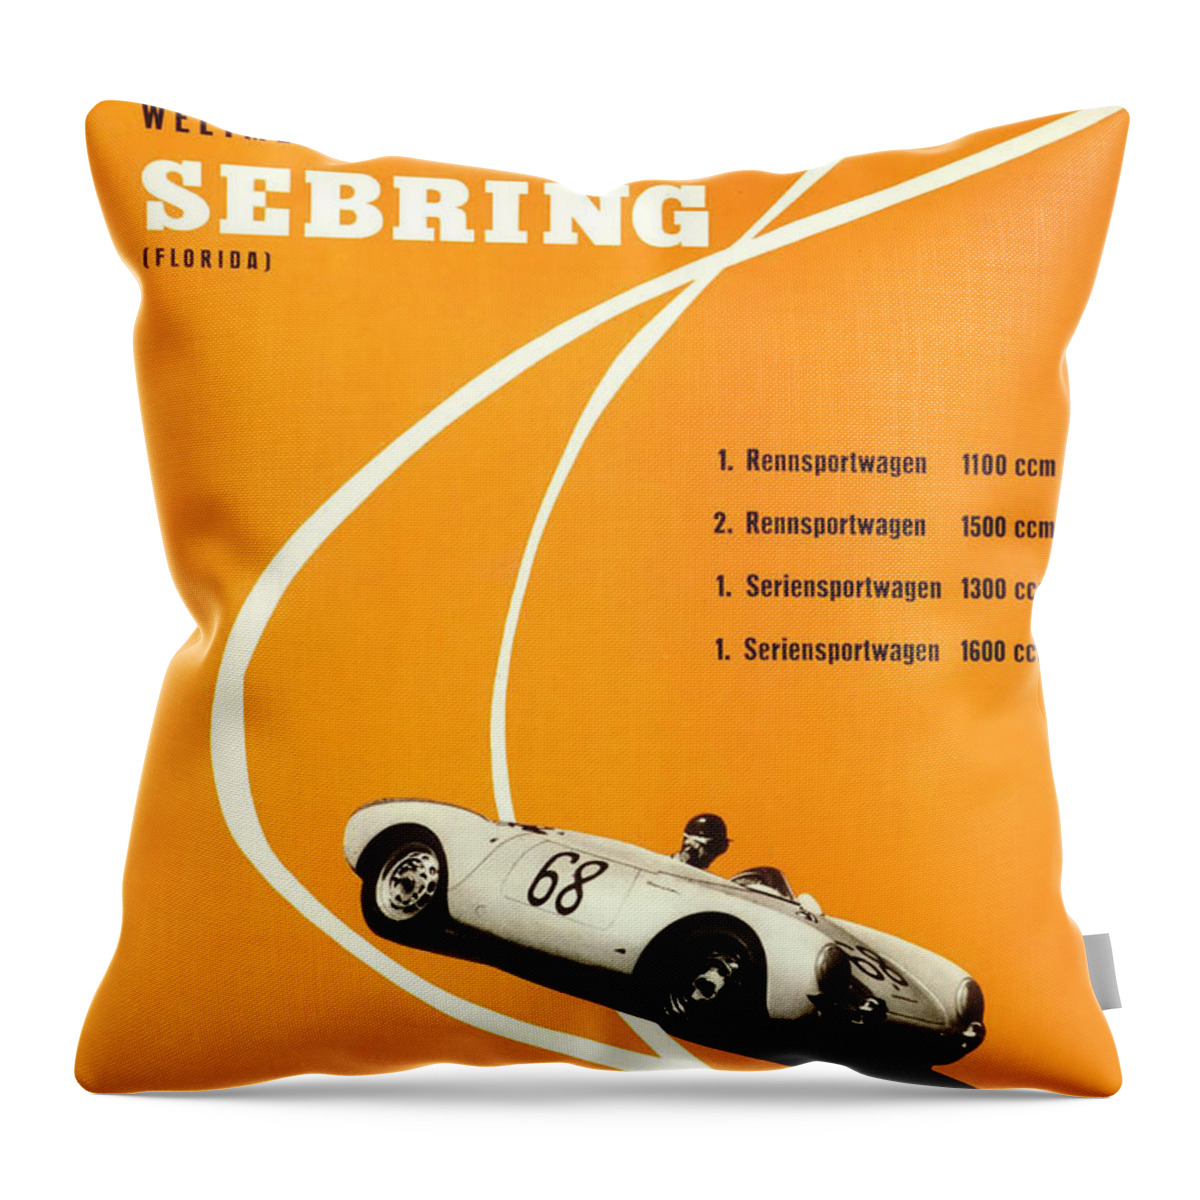 Sebring Throw Pillow featuring the digital art 1968 Porsche Sebring Florida Poster by Georgia Fowler